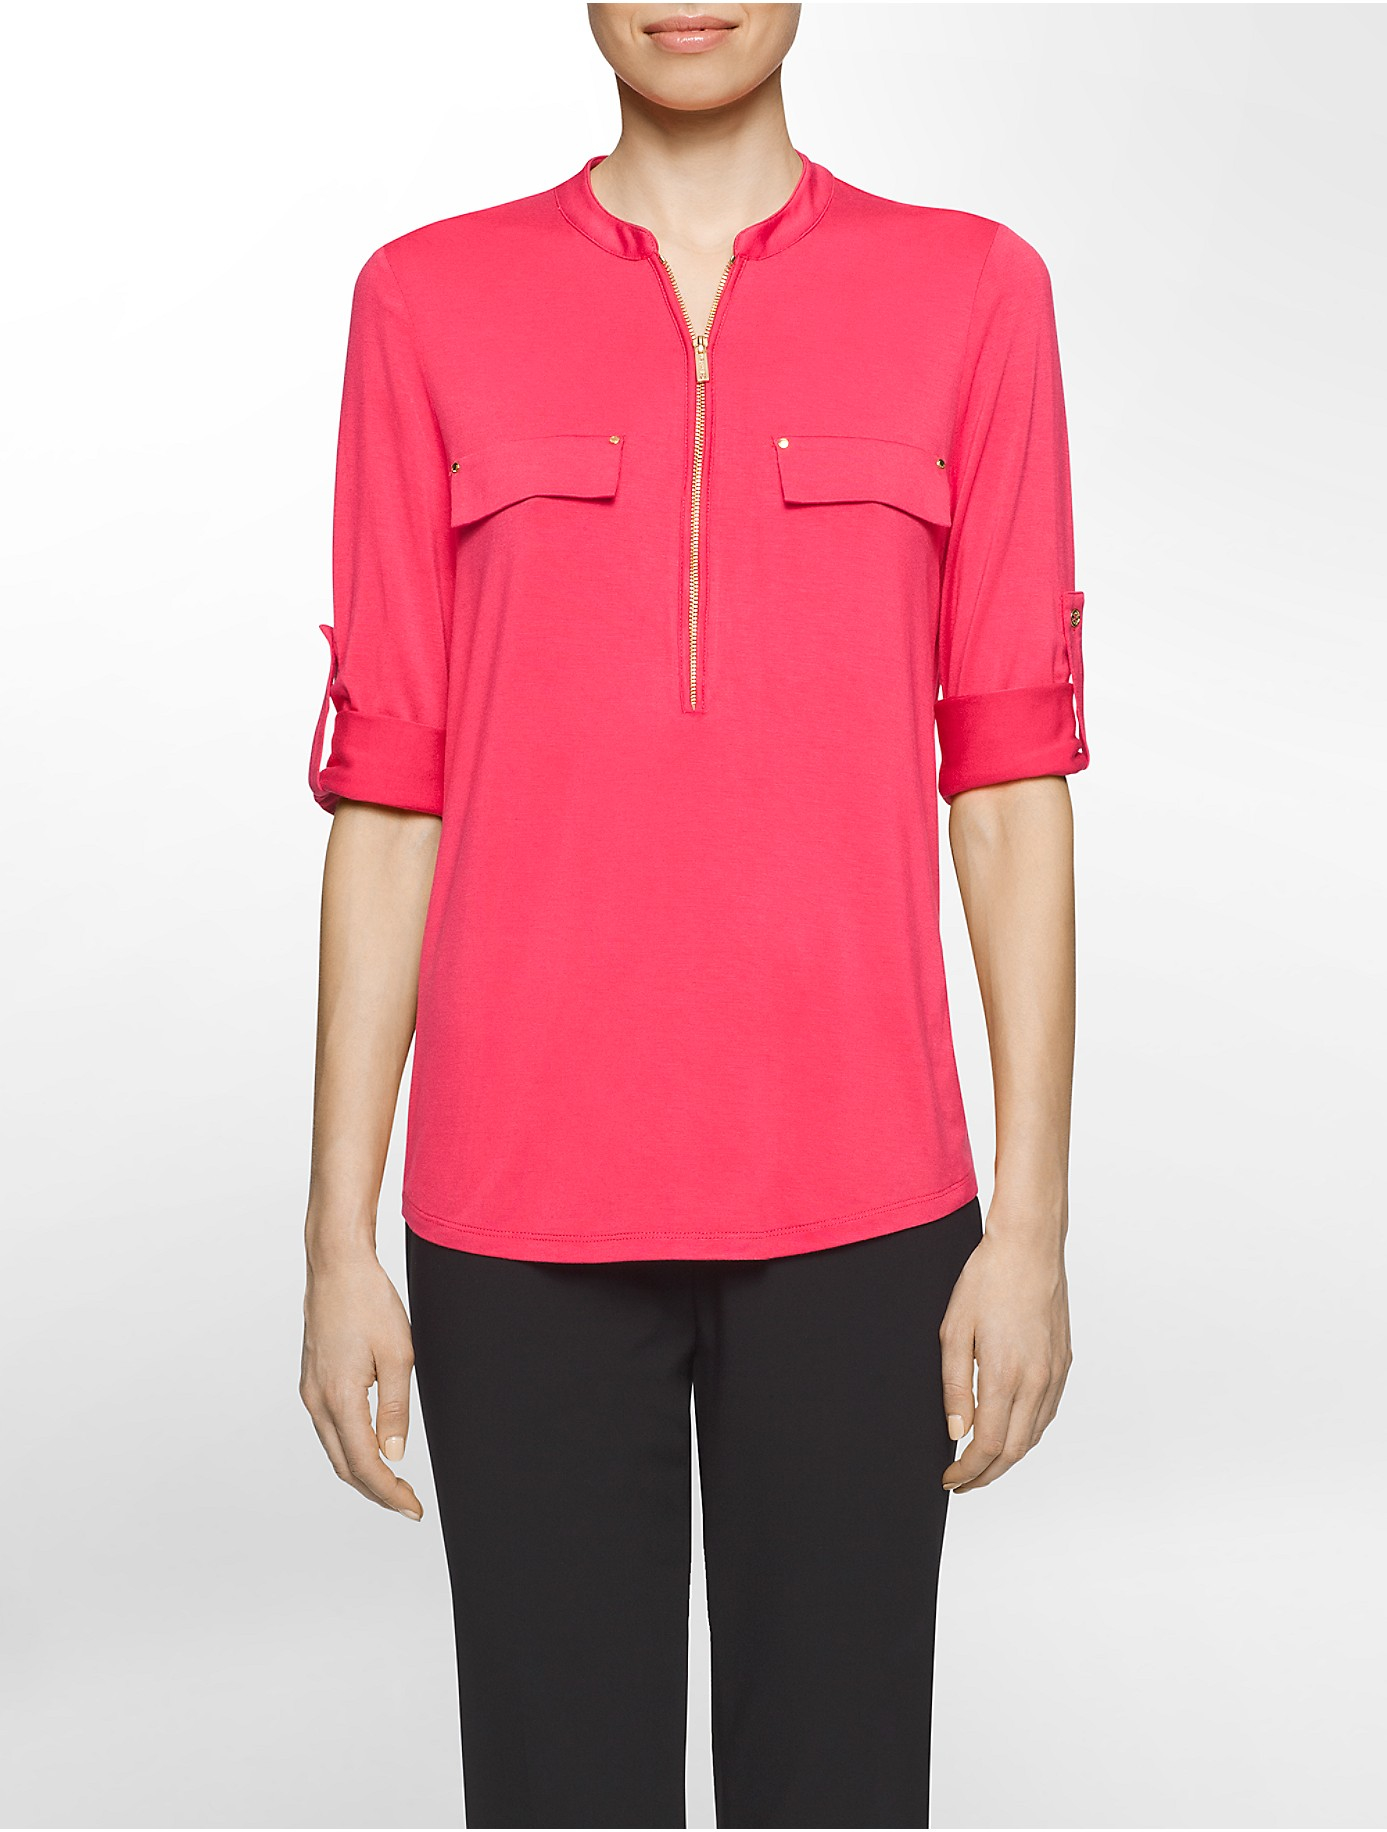 Calvin Klein Zip Roll-up 3/4 Sleeve Top in Pink | Lyst